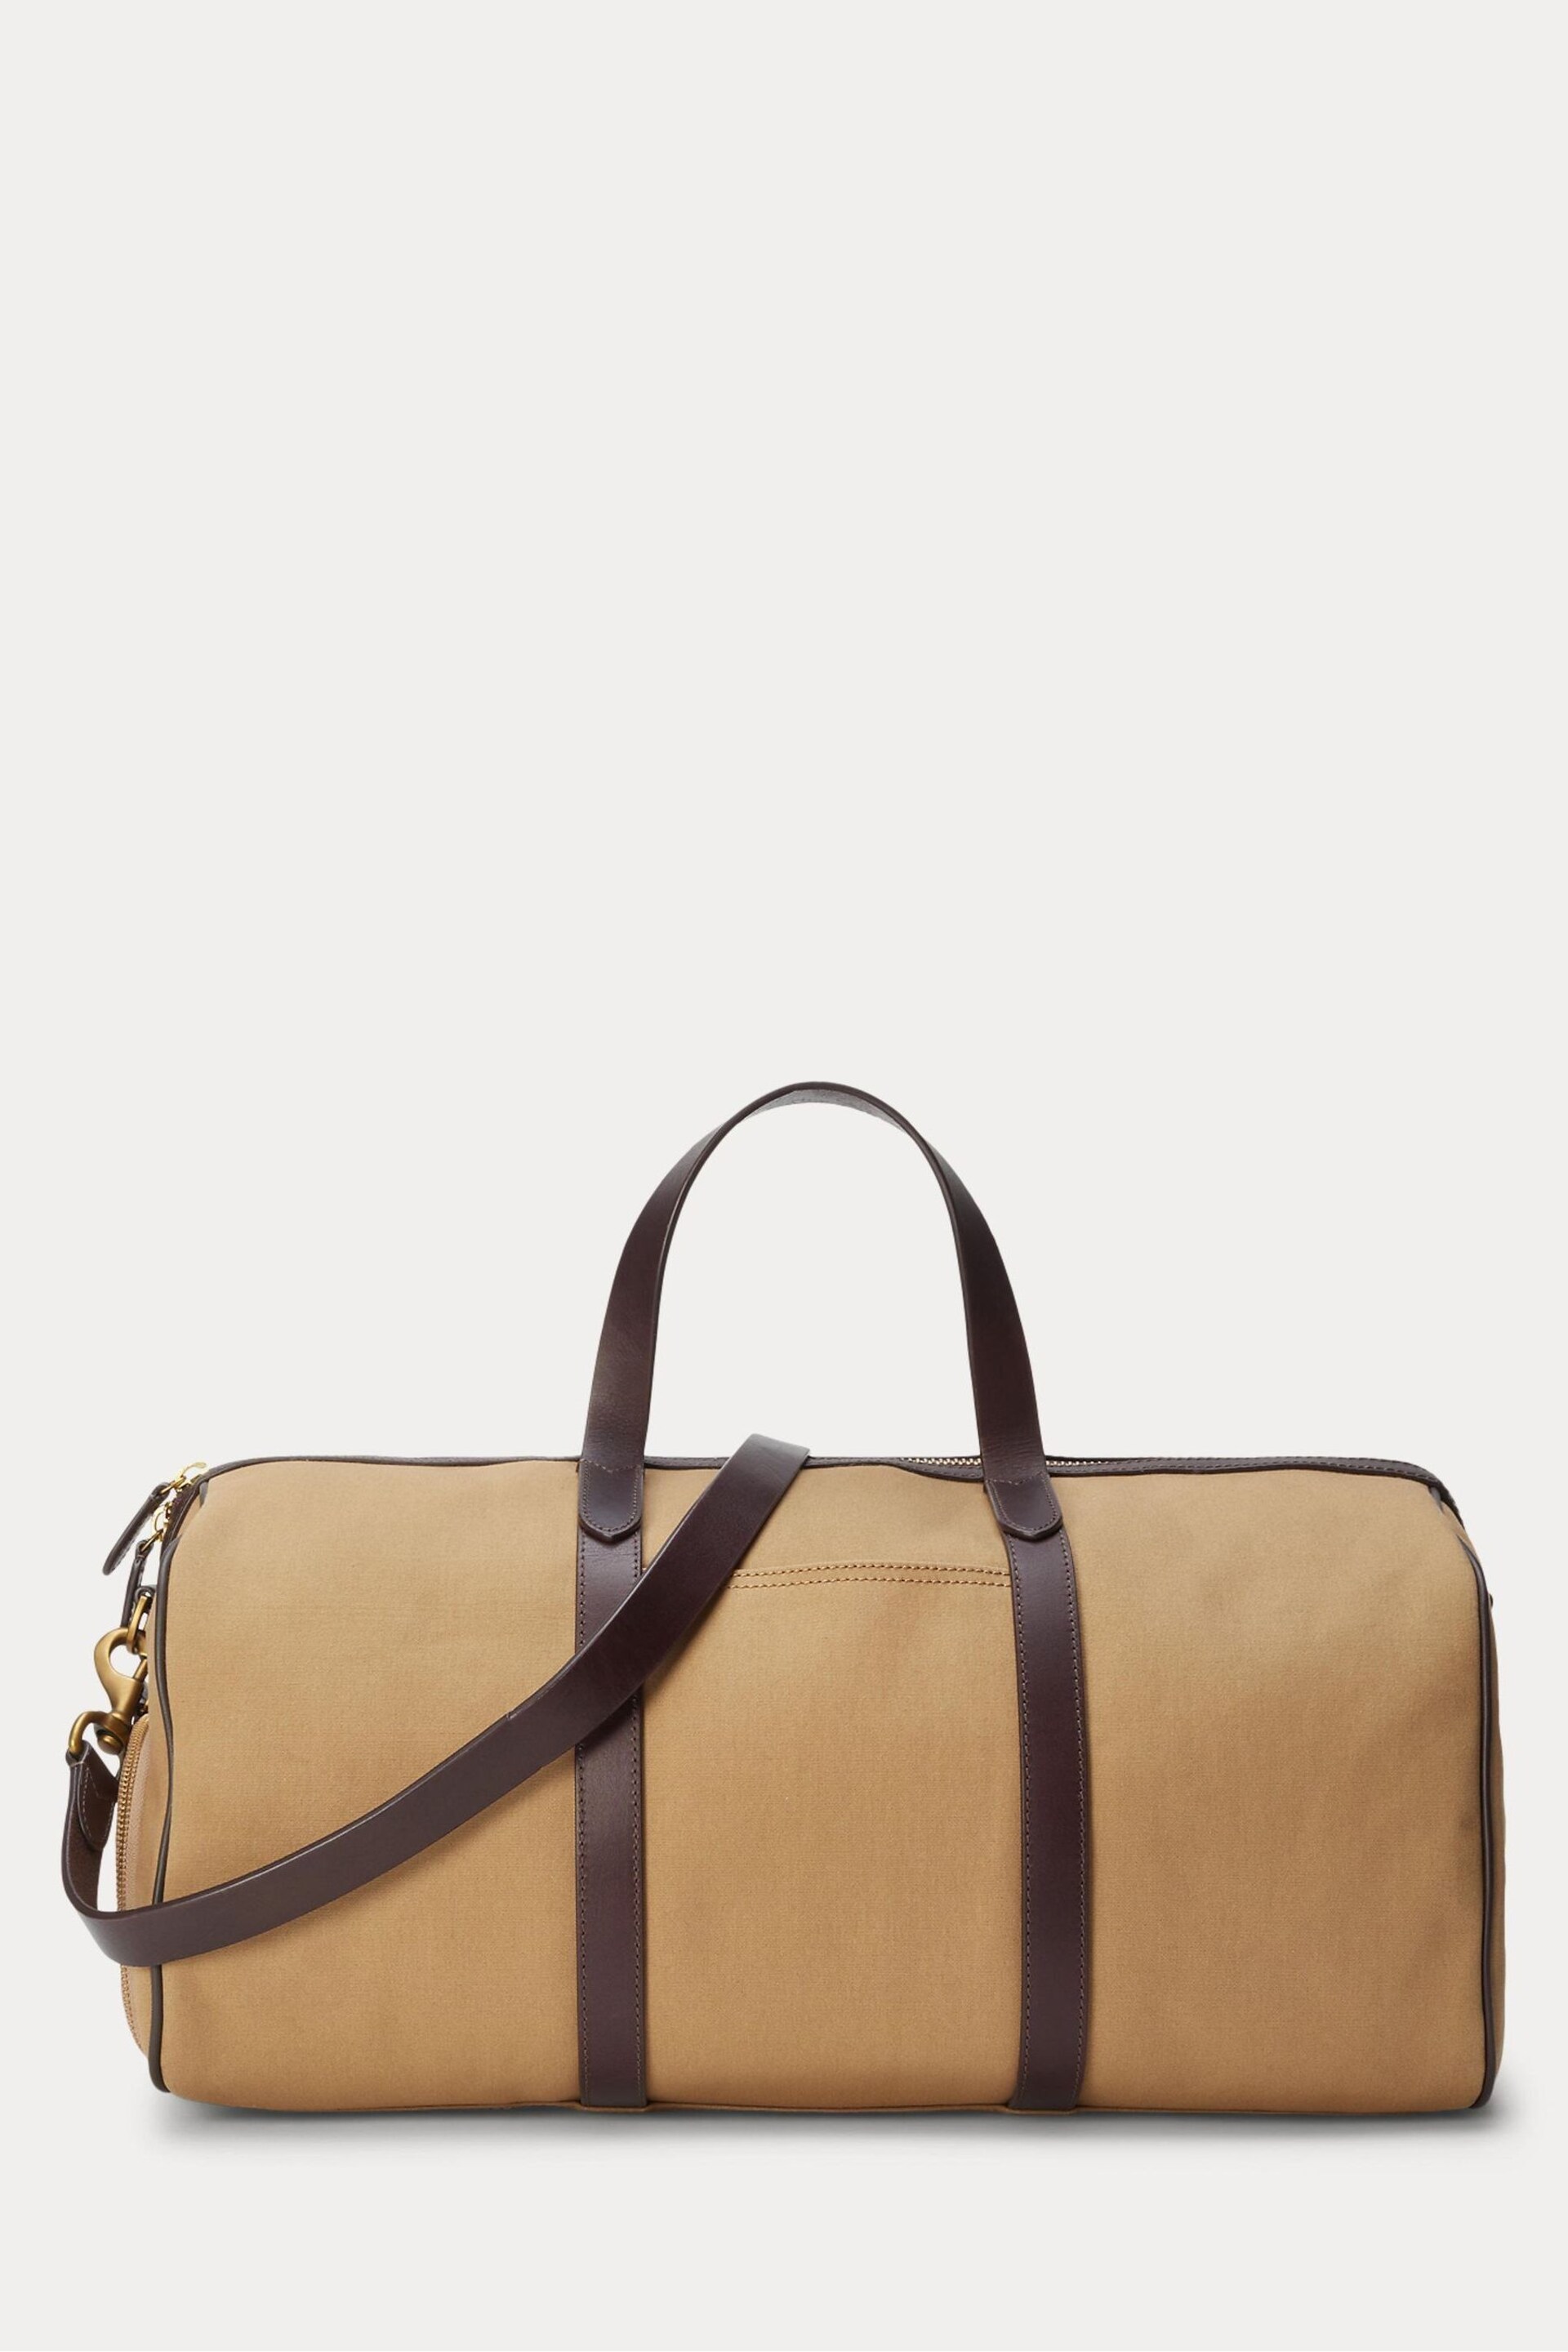 Polo Ralph Lauren Leather-Trim Canvas Duffel Bag - Image 4 of 6